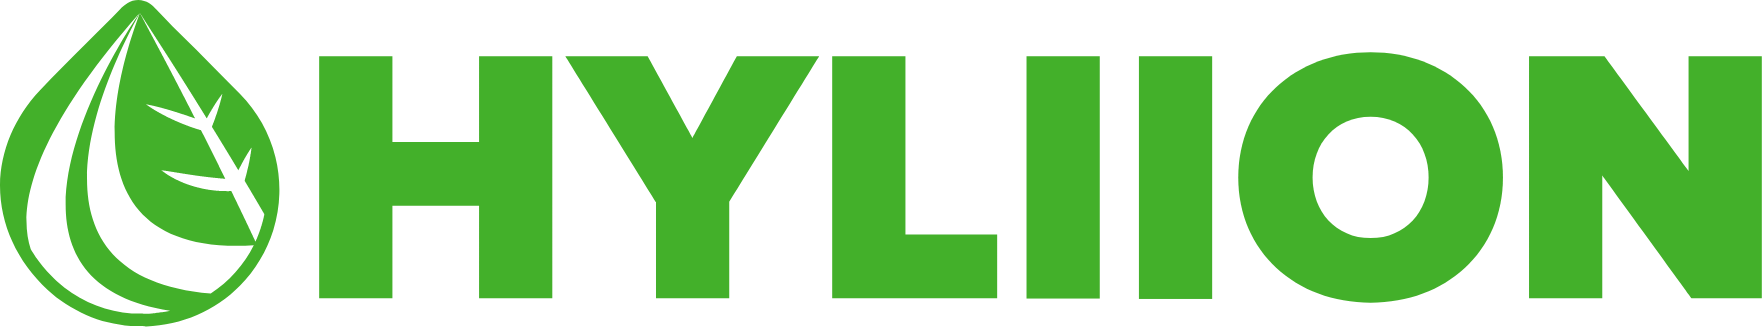 Hyliion logo large (transparent PNG)